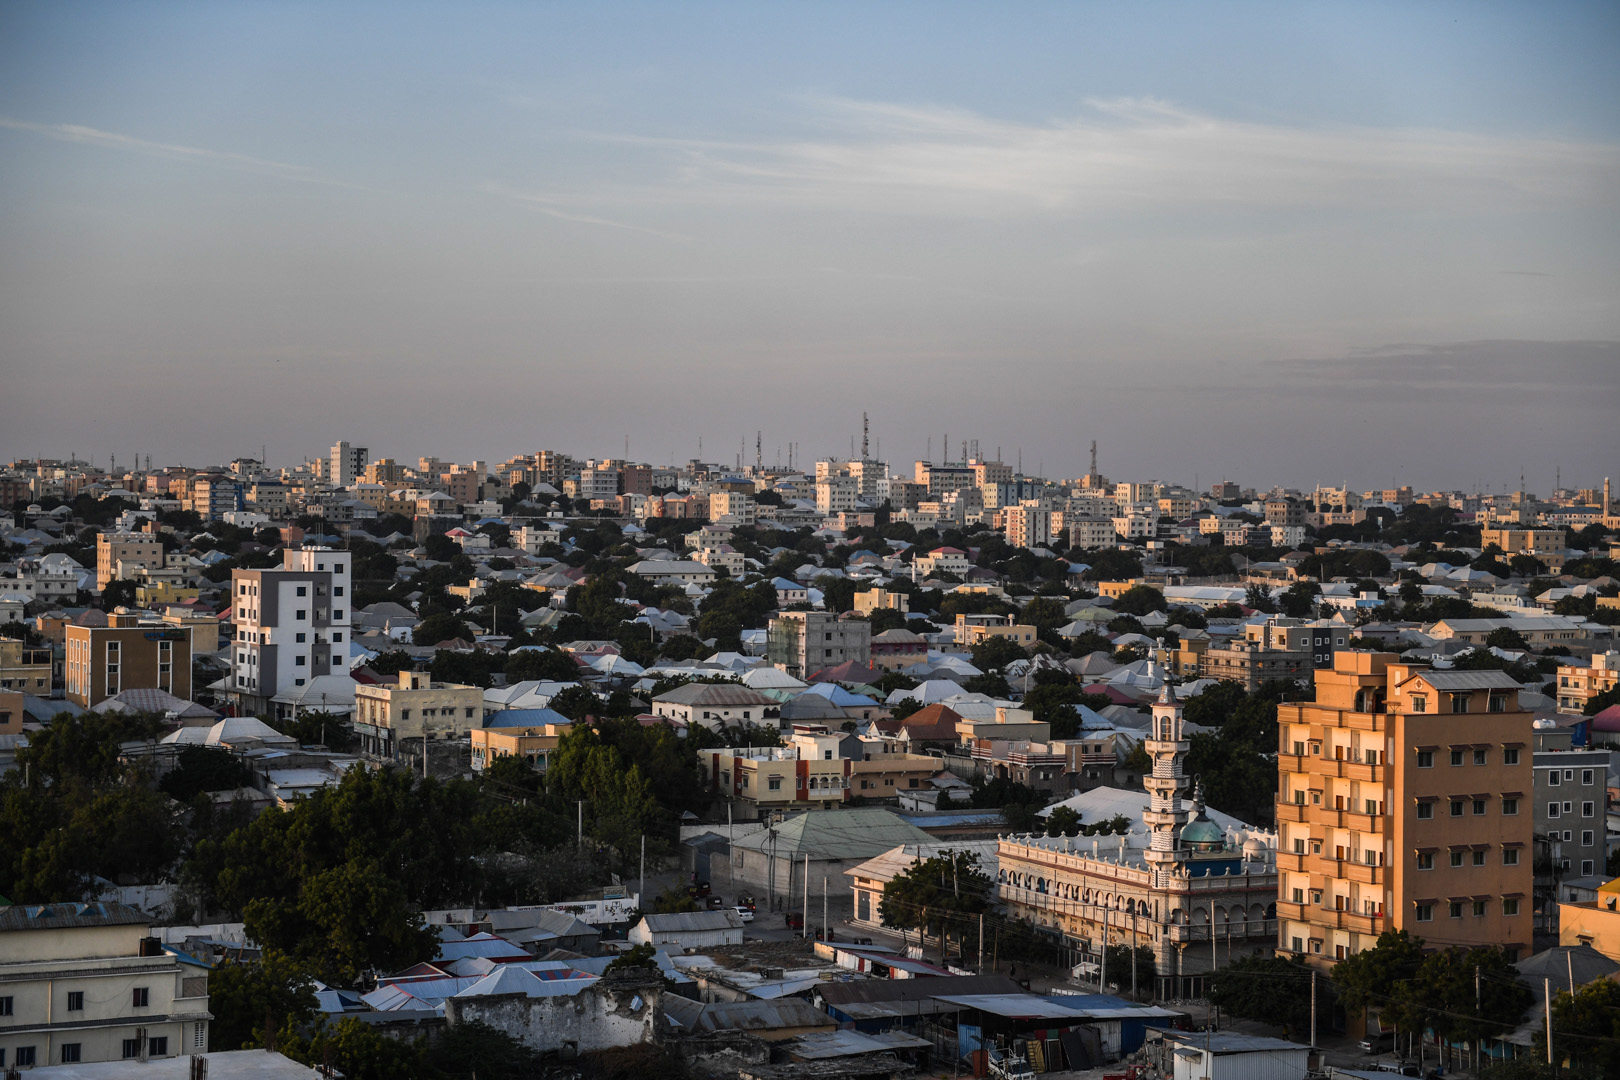 View of the Somali capital Mogadishu